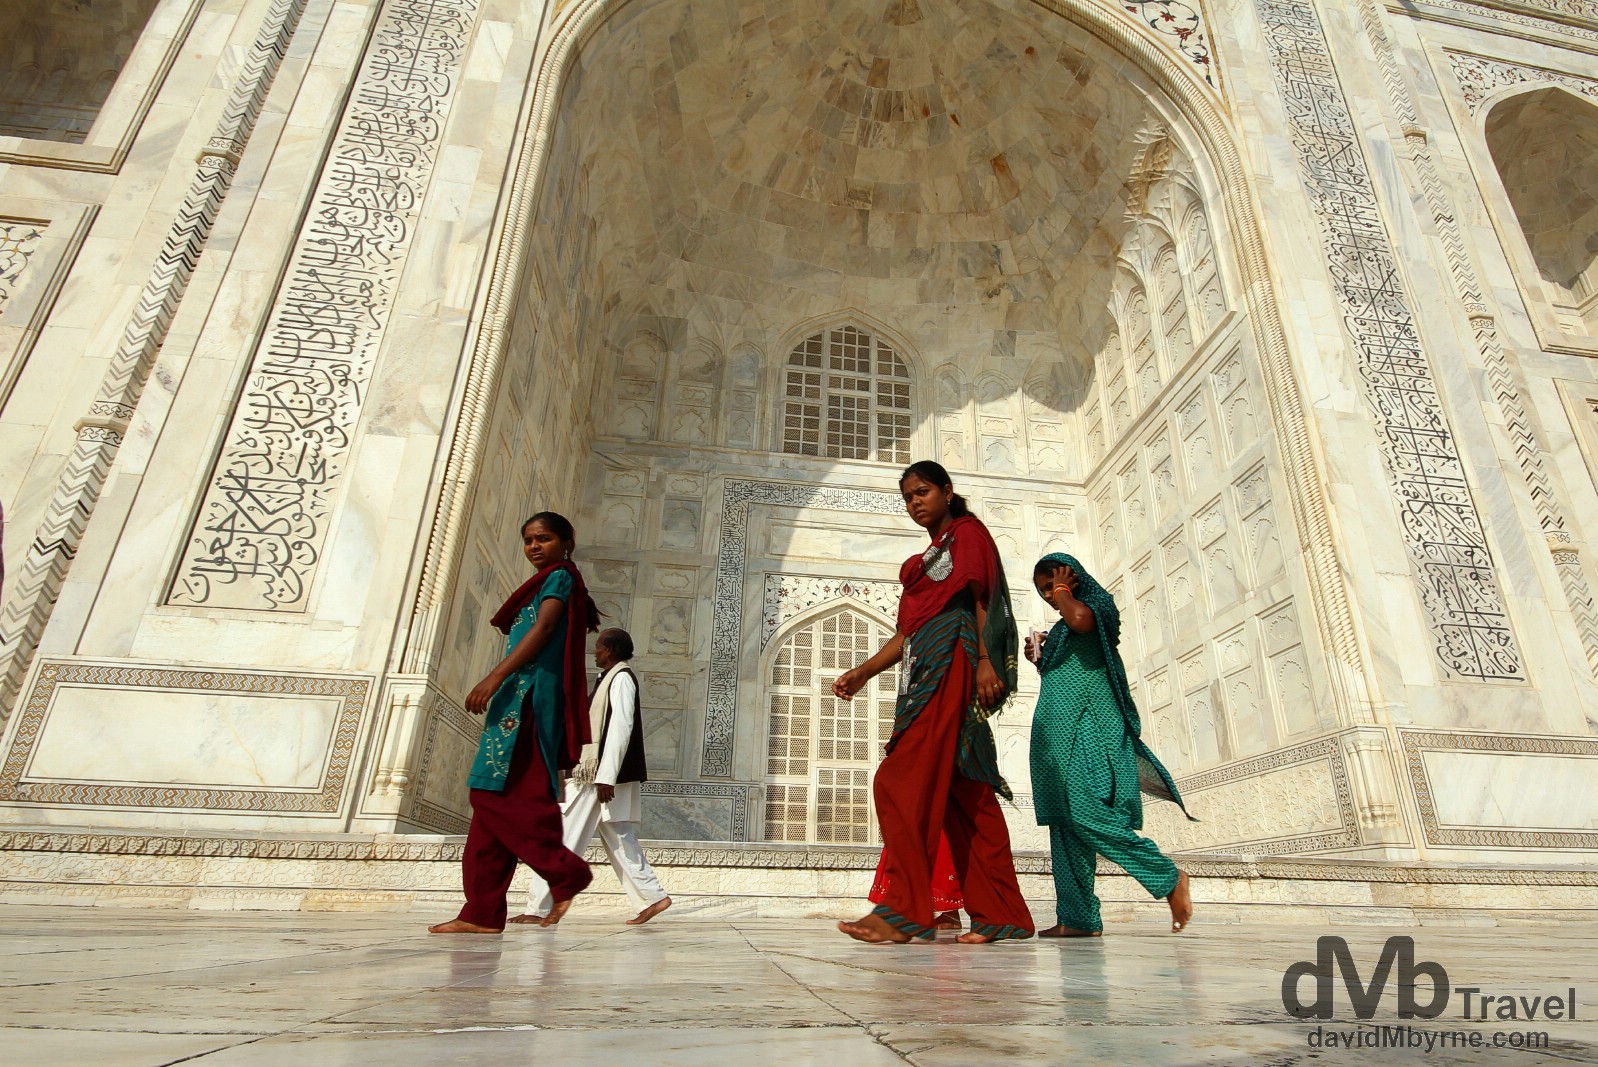 Walking on the raised marble platform surrounding the Taj Mahal in Agra, Uttar Pradesh, India. October 11th 2012.